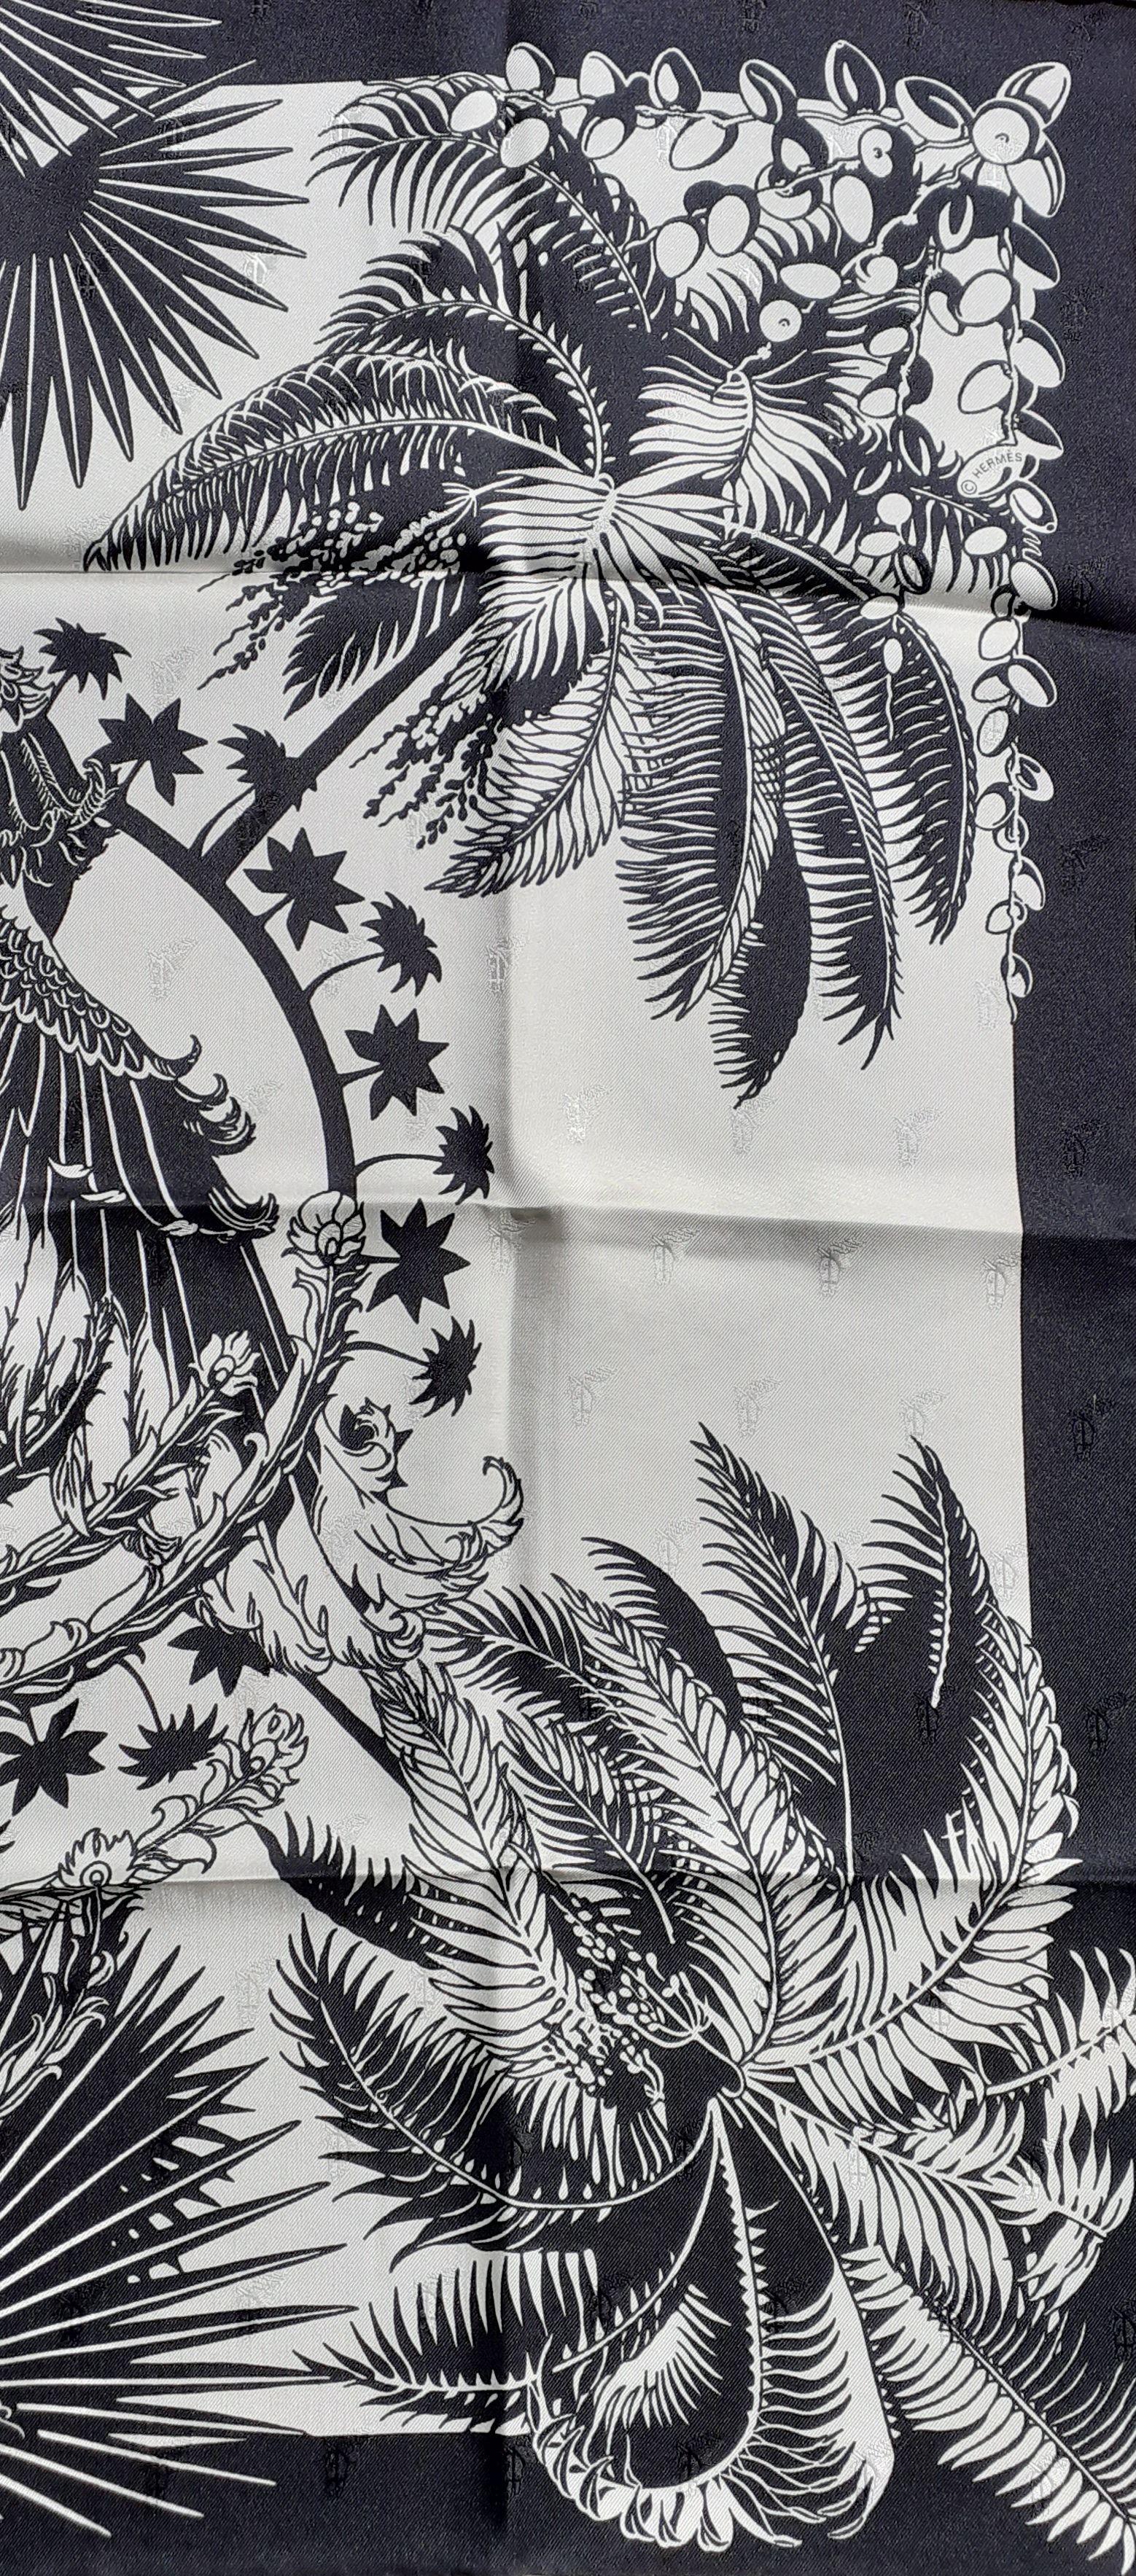 Gorgeous Authentic Hermès Scarf

Pattern: 